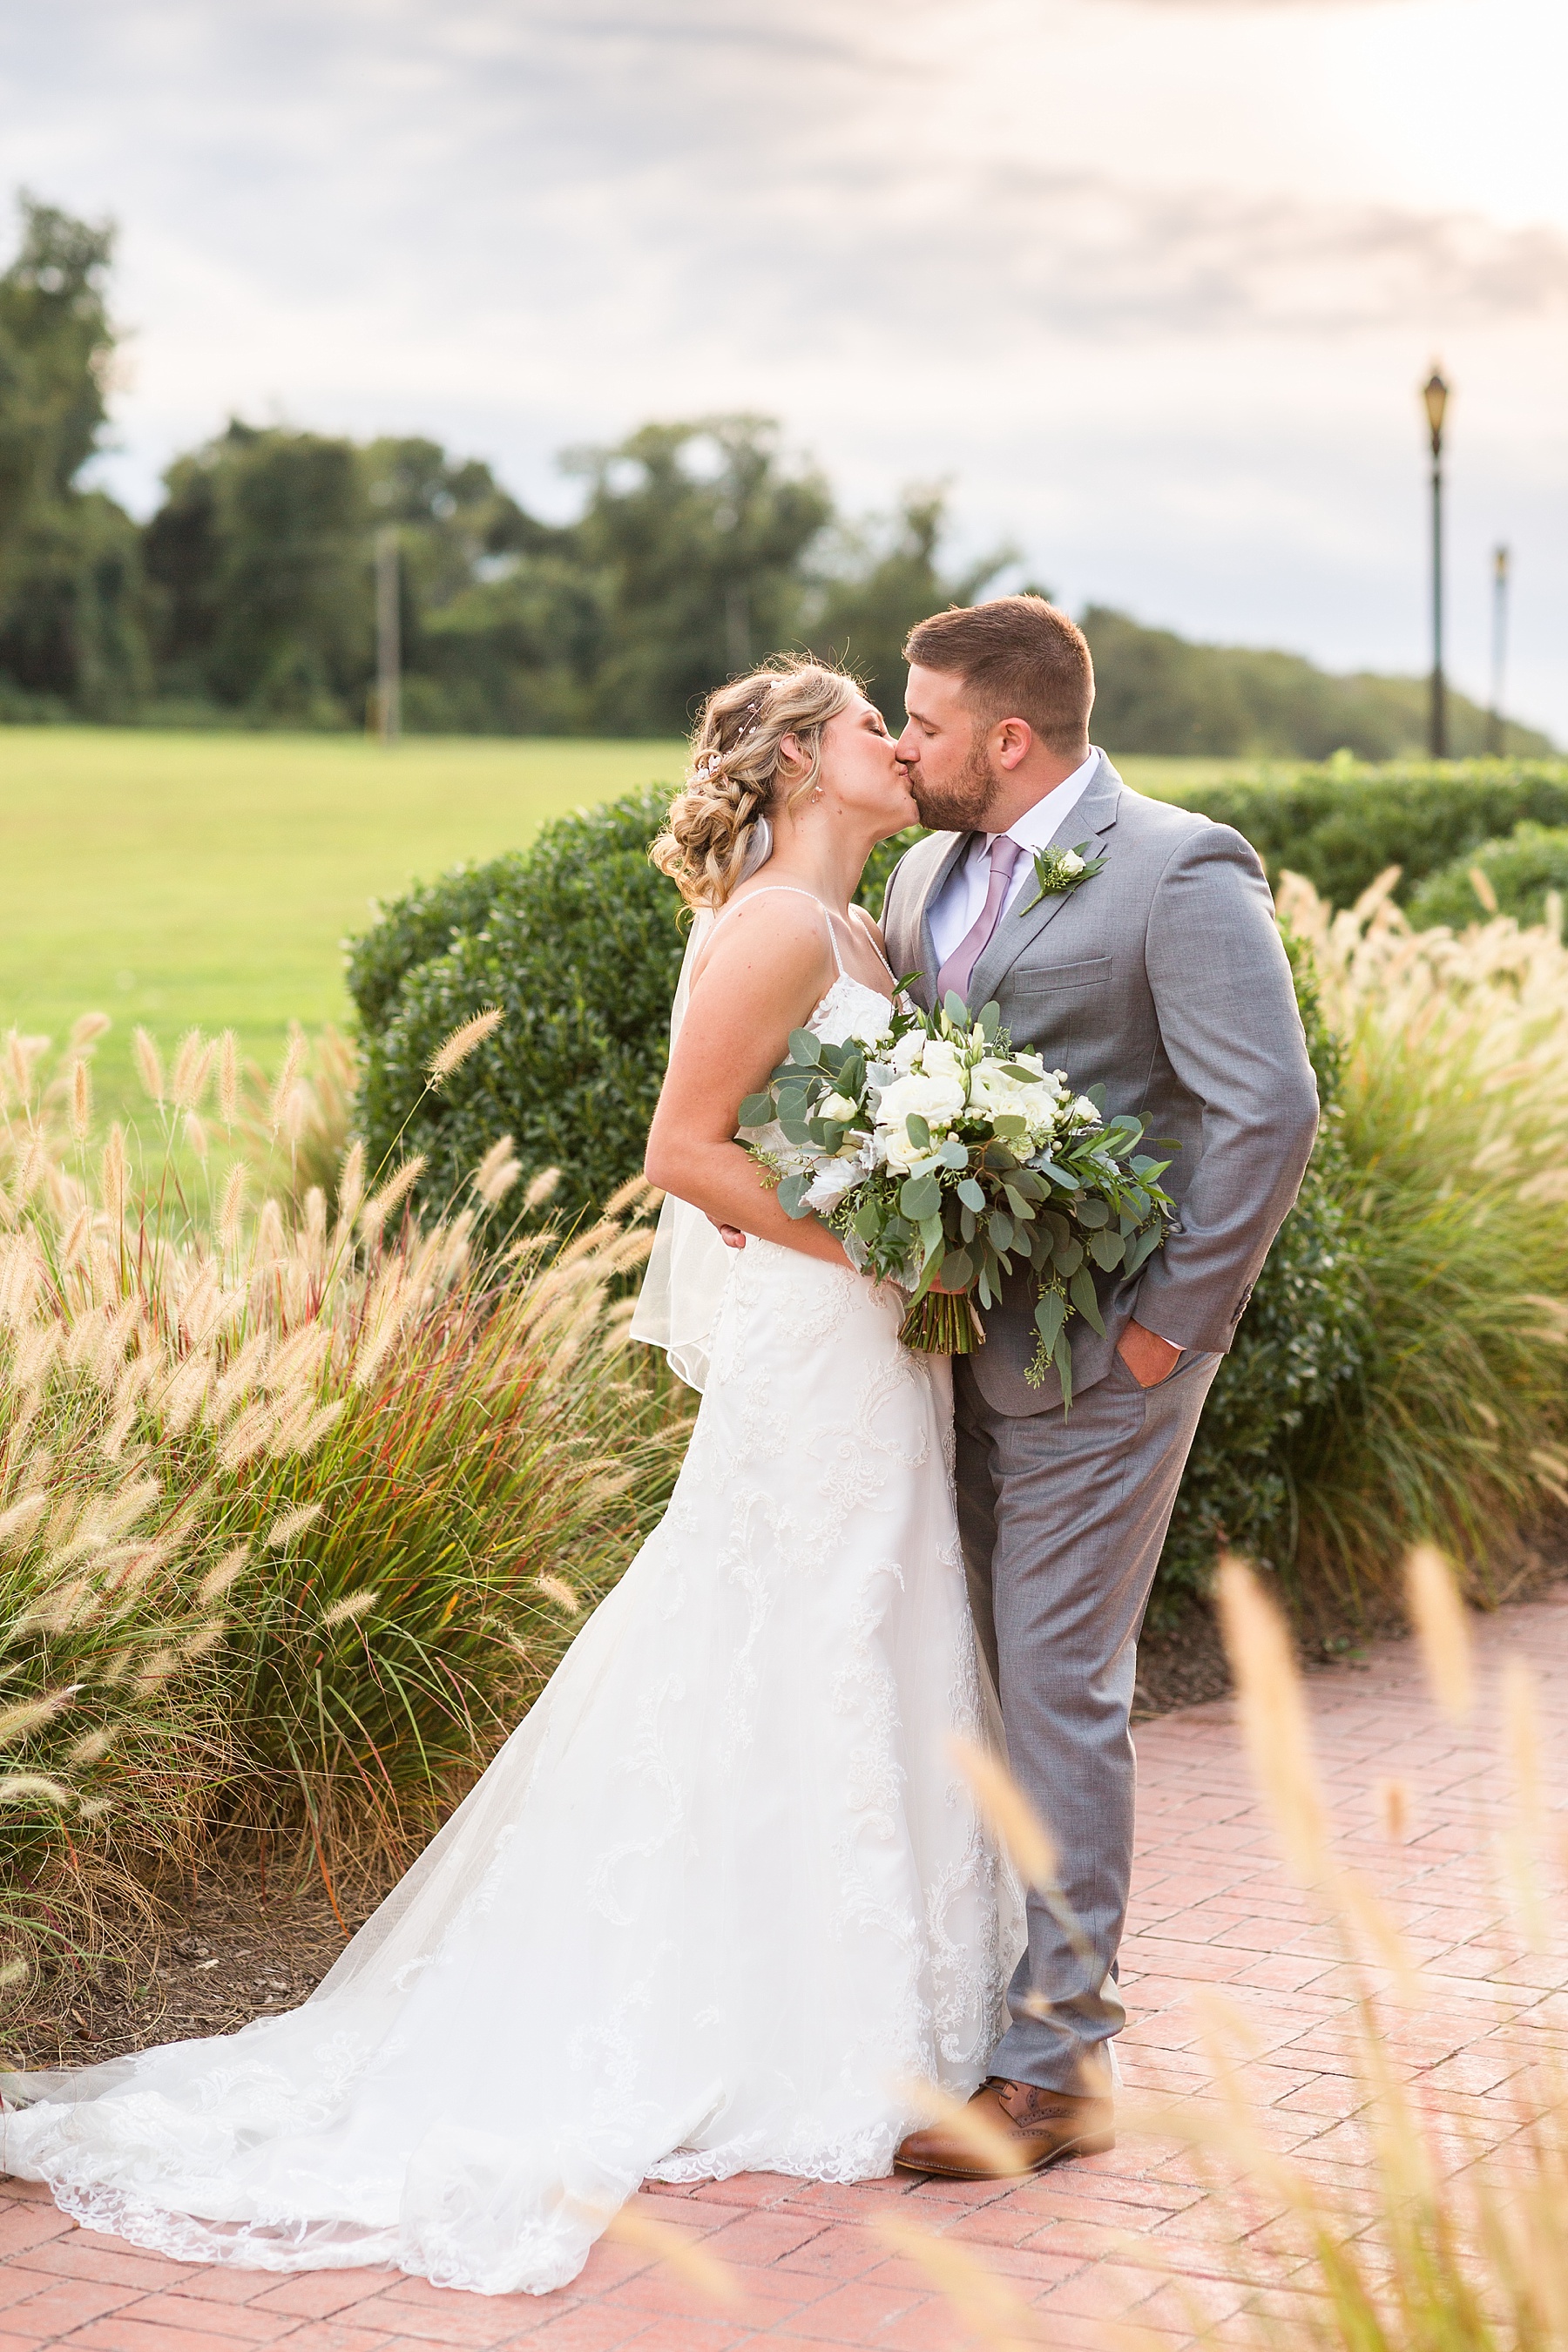 Swan Harbor Farm wedding photos by Alexandra Mandato Photography